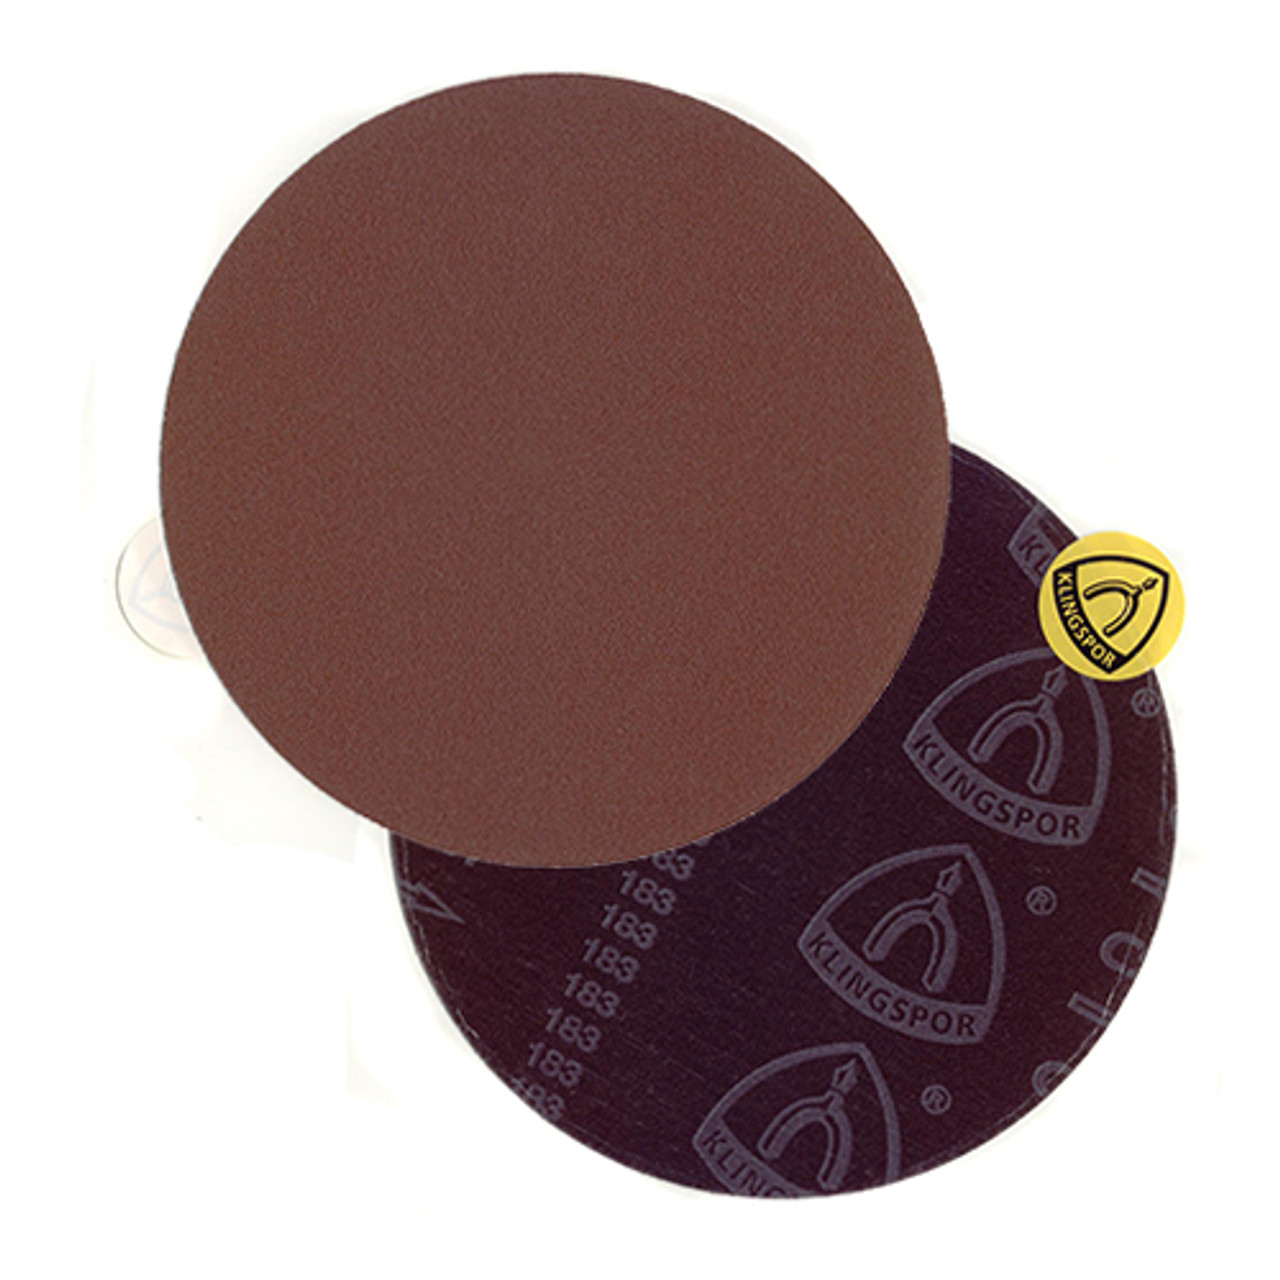 Klingspor Abrasives 8" No Hole, Cloth Backed, Pressure Sensitive Adhesive, 100 Grit Discs, 5pk